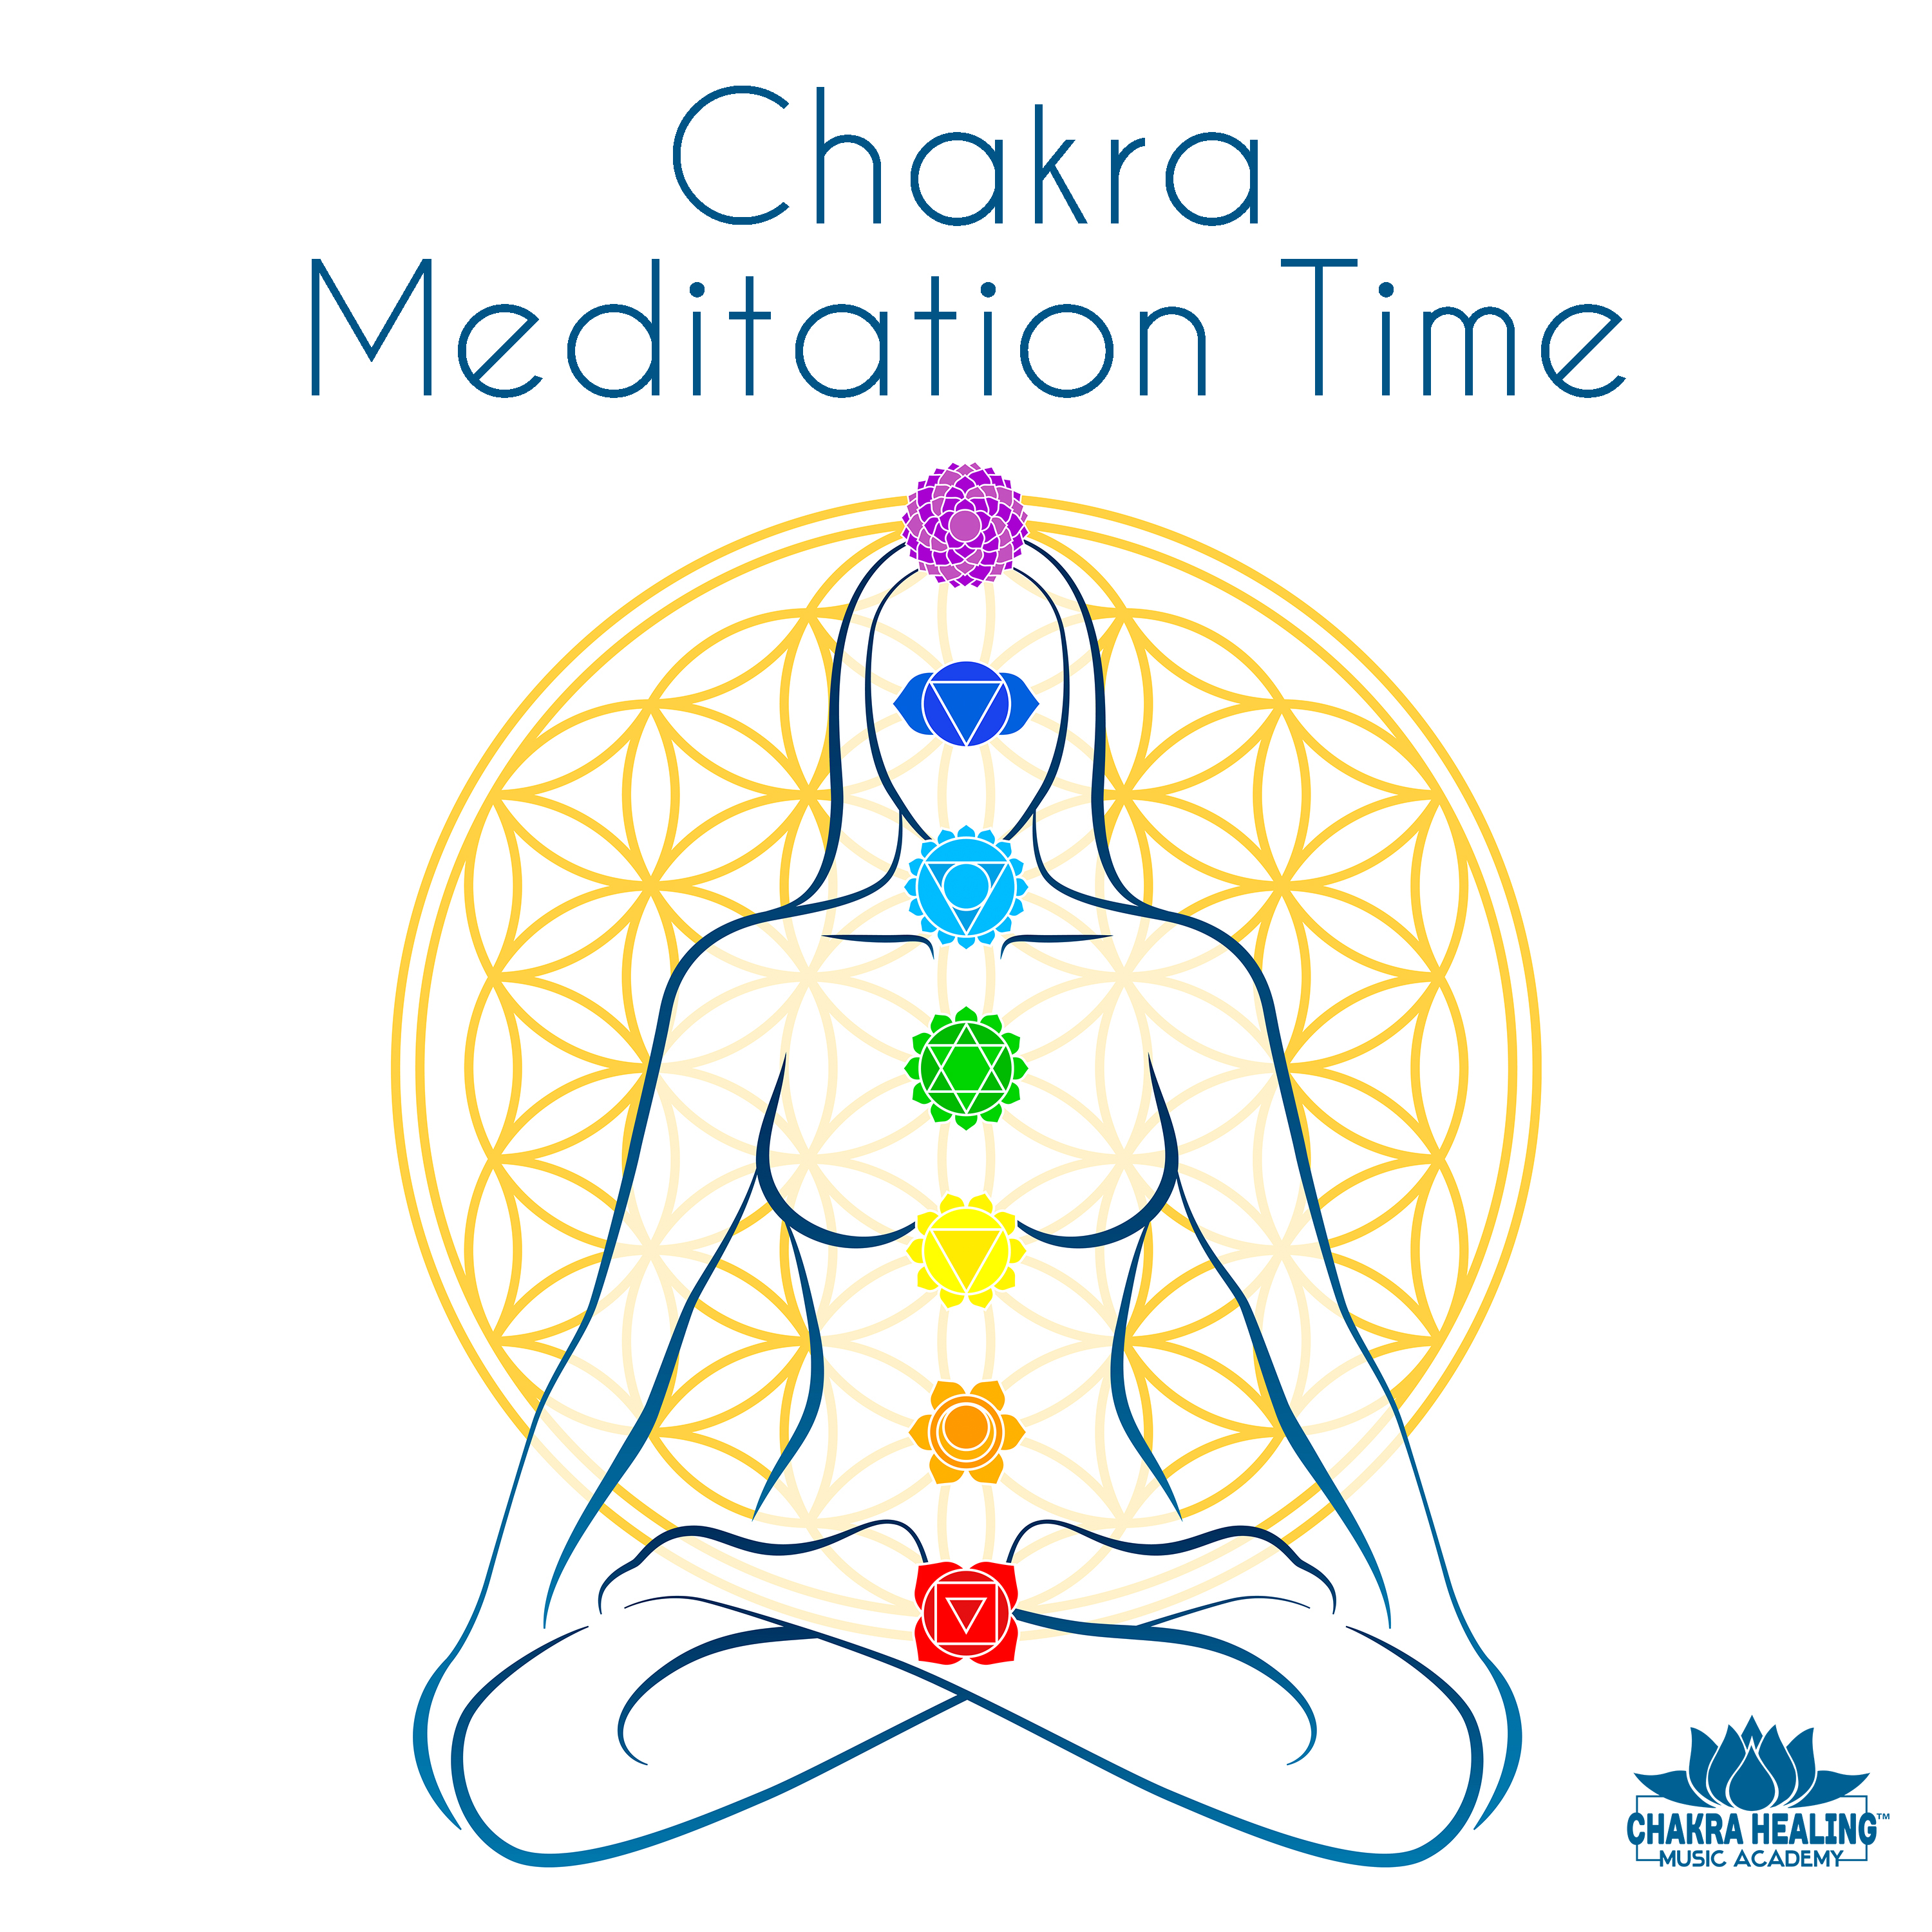 Chakra Meditation Time